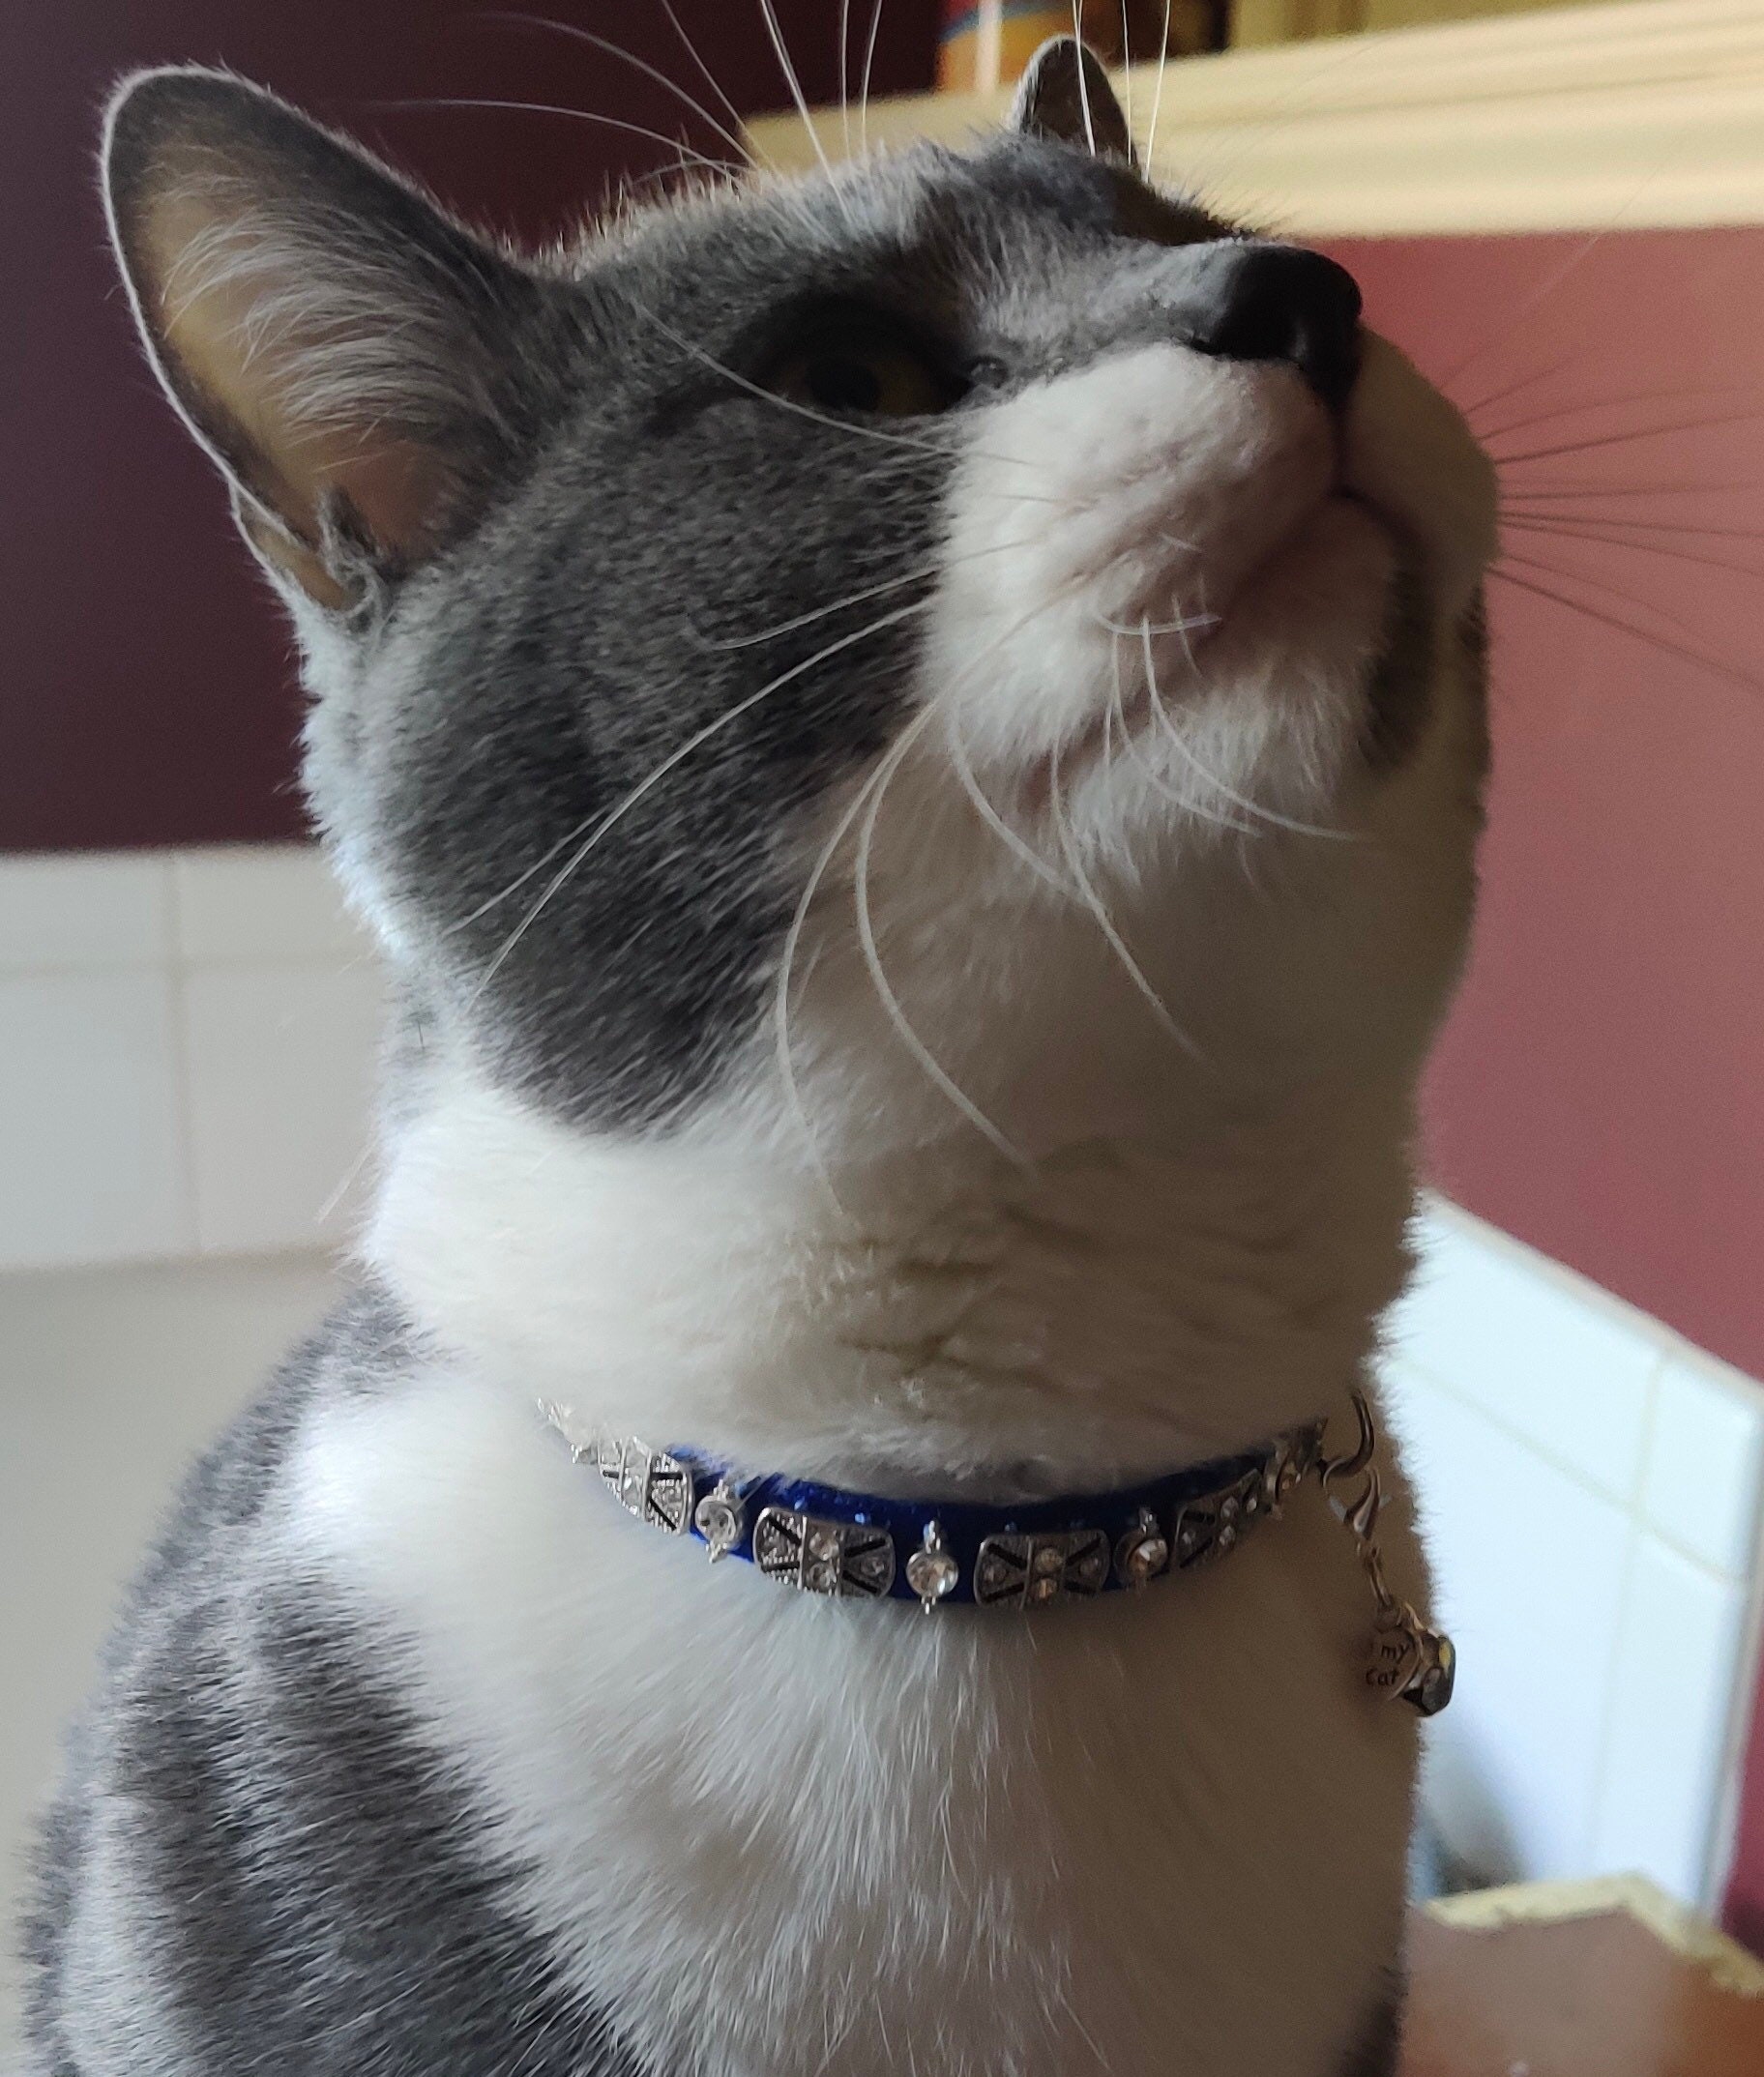 1/2 Luxury Cat Collars with Swarovski Crystals